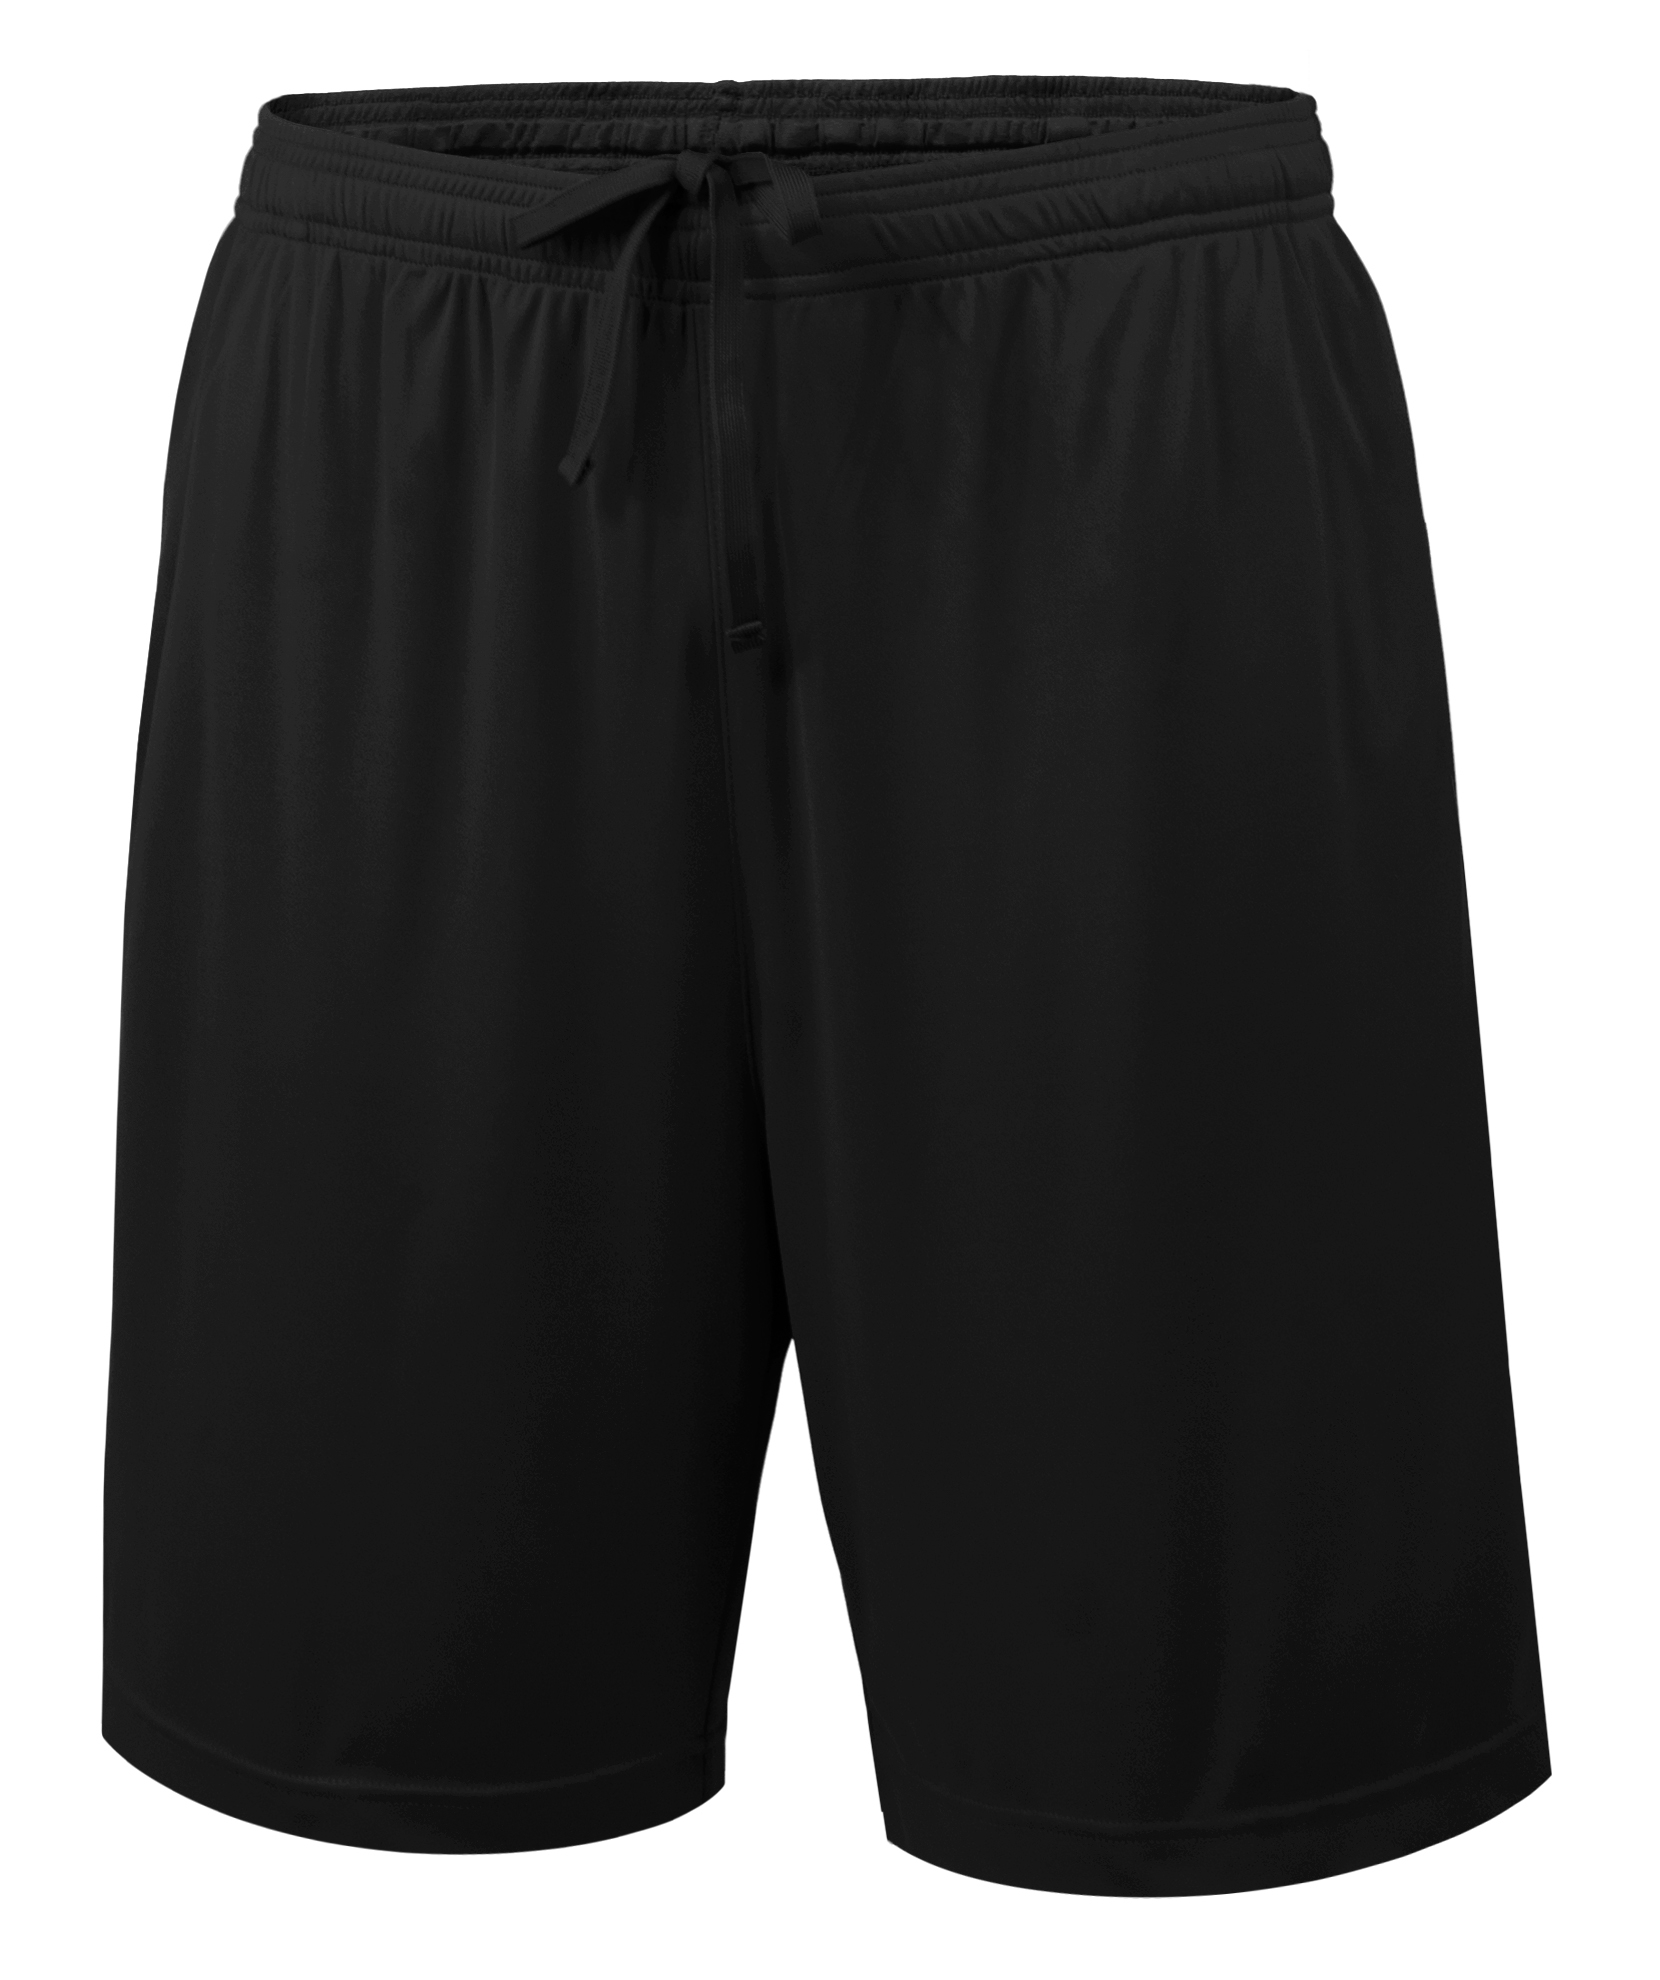 BAW Athletic Wear S707 - Men's Xtreme-Tek Two Pocket Short